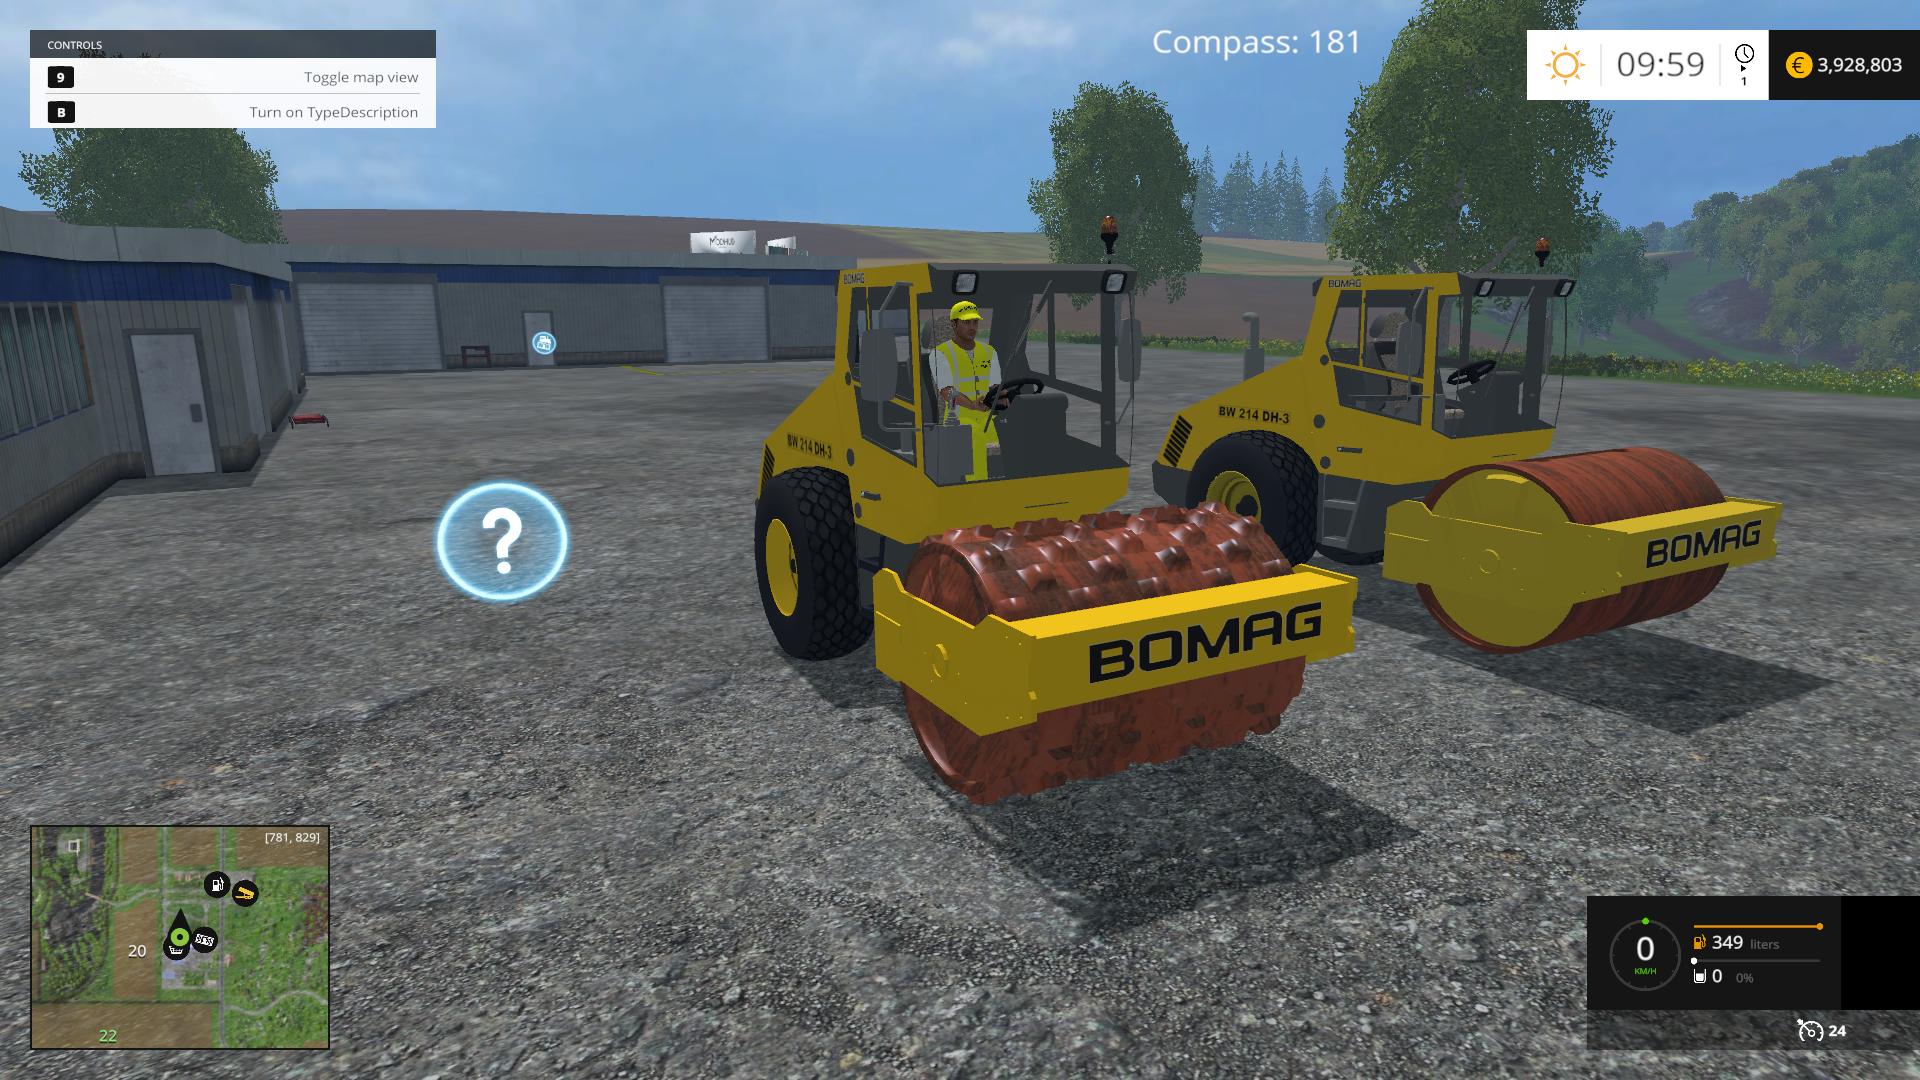 Pack Bomag V2 • Farming Simulator 19 17 22 Mods Fs19 17 22 Mods 7241